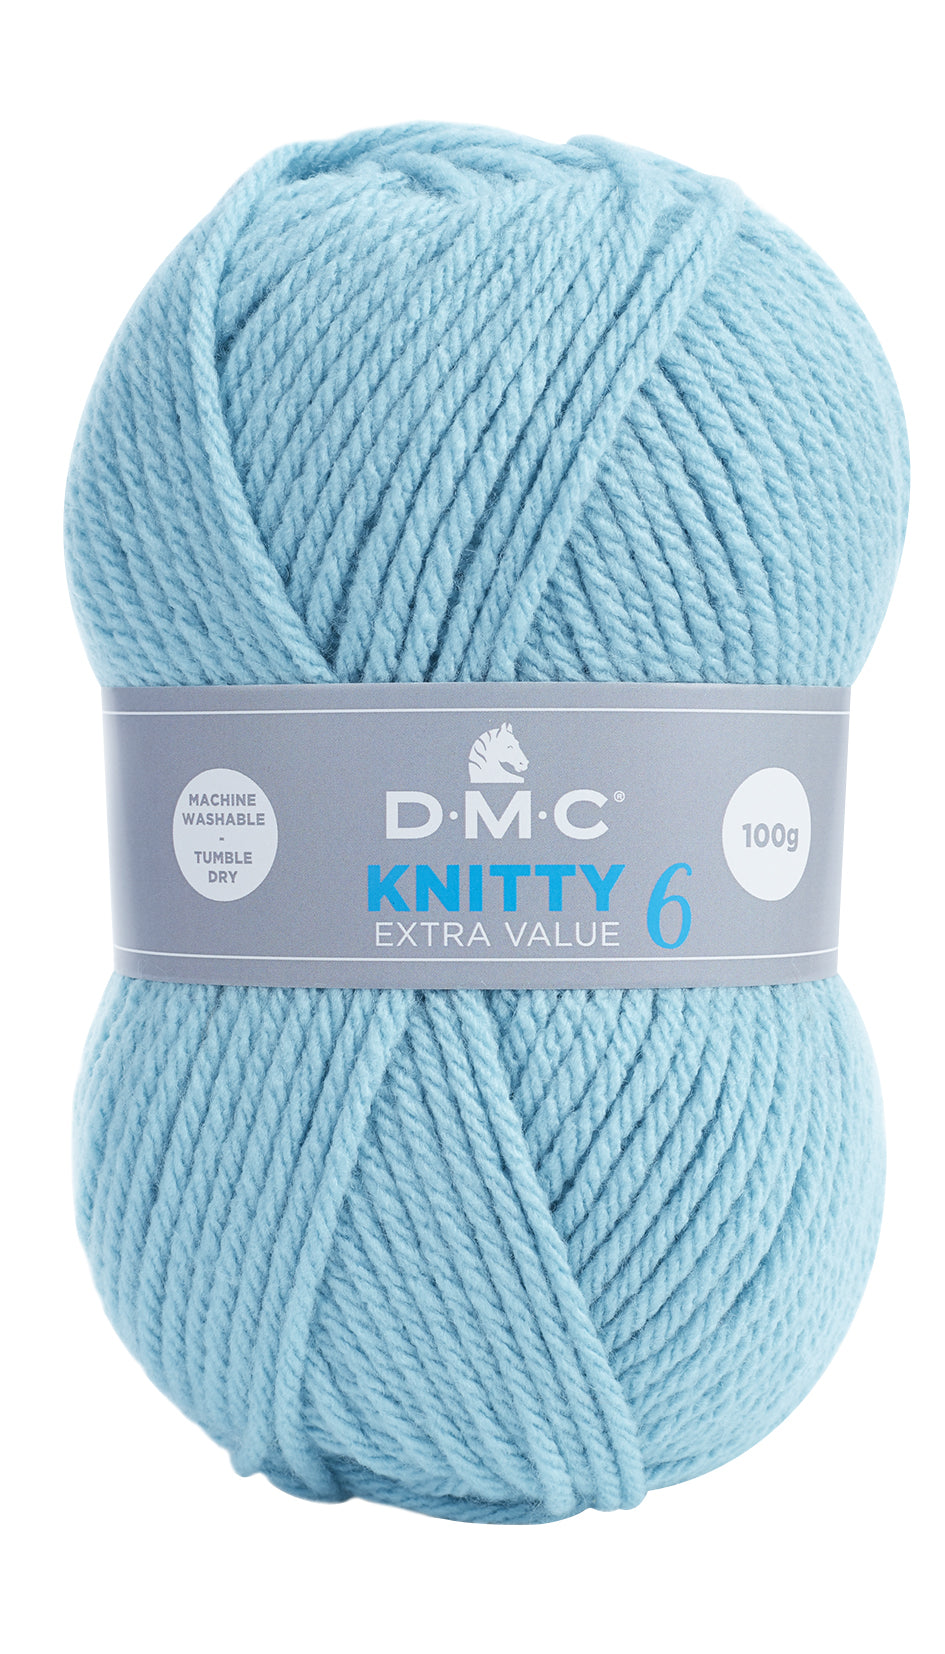 Lana Dmc Knitty 6 Colore 741